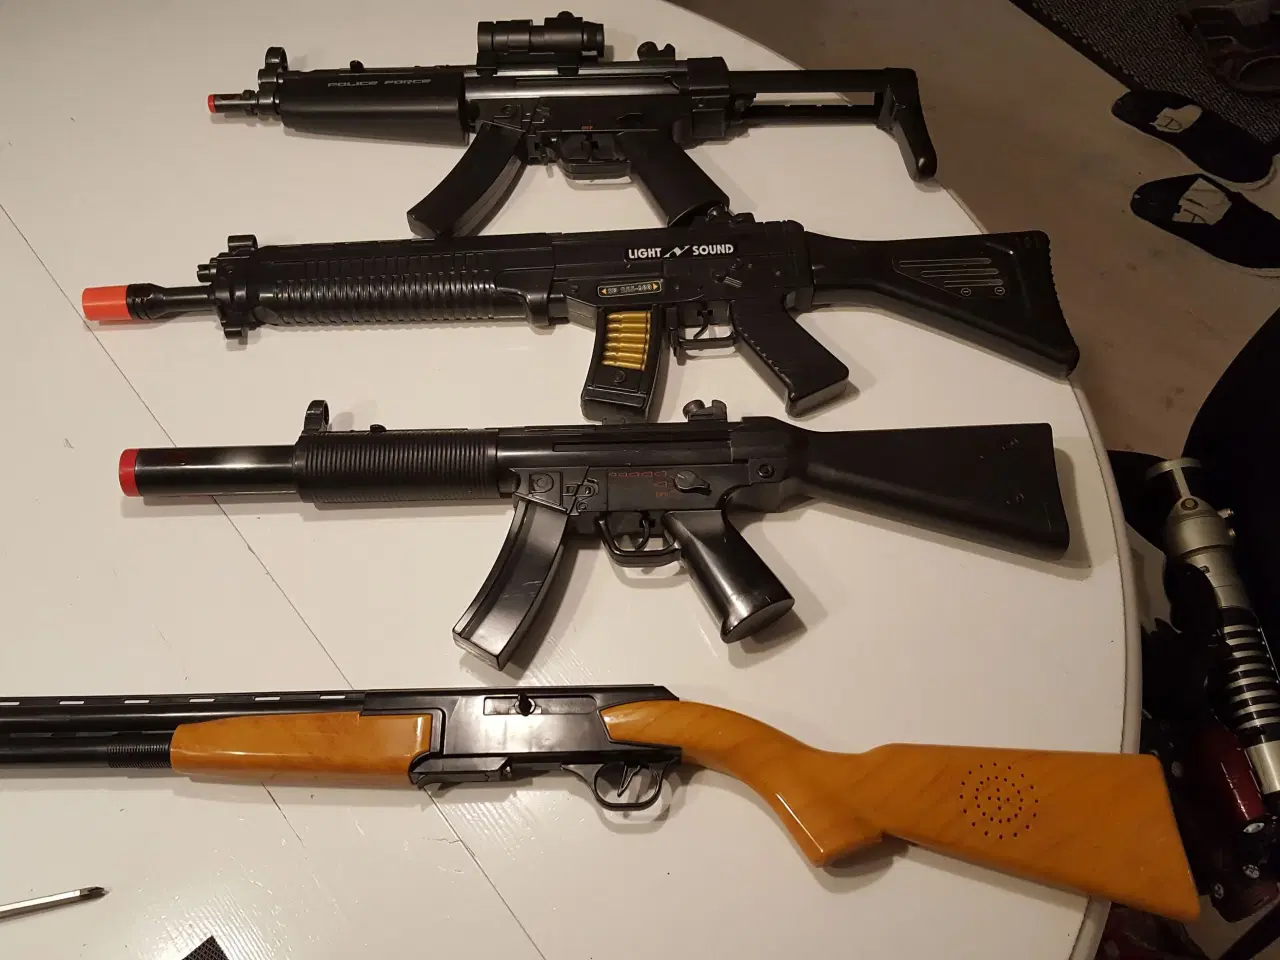 Billede 1 - Våben, maskingevær og gevær